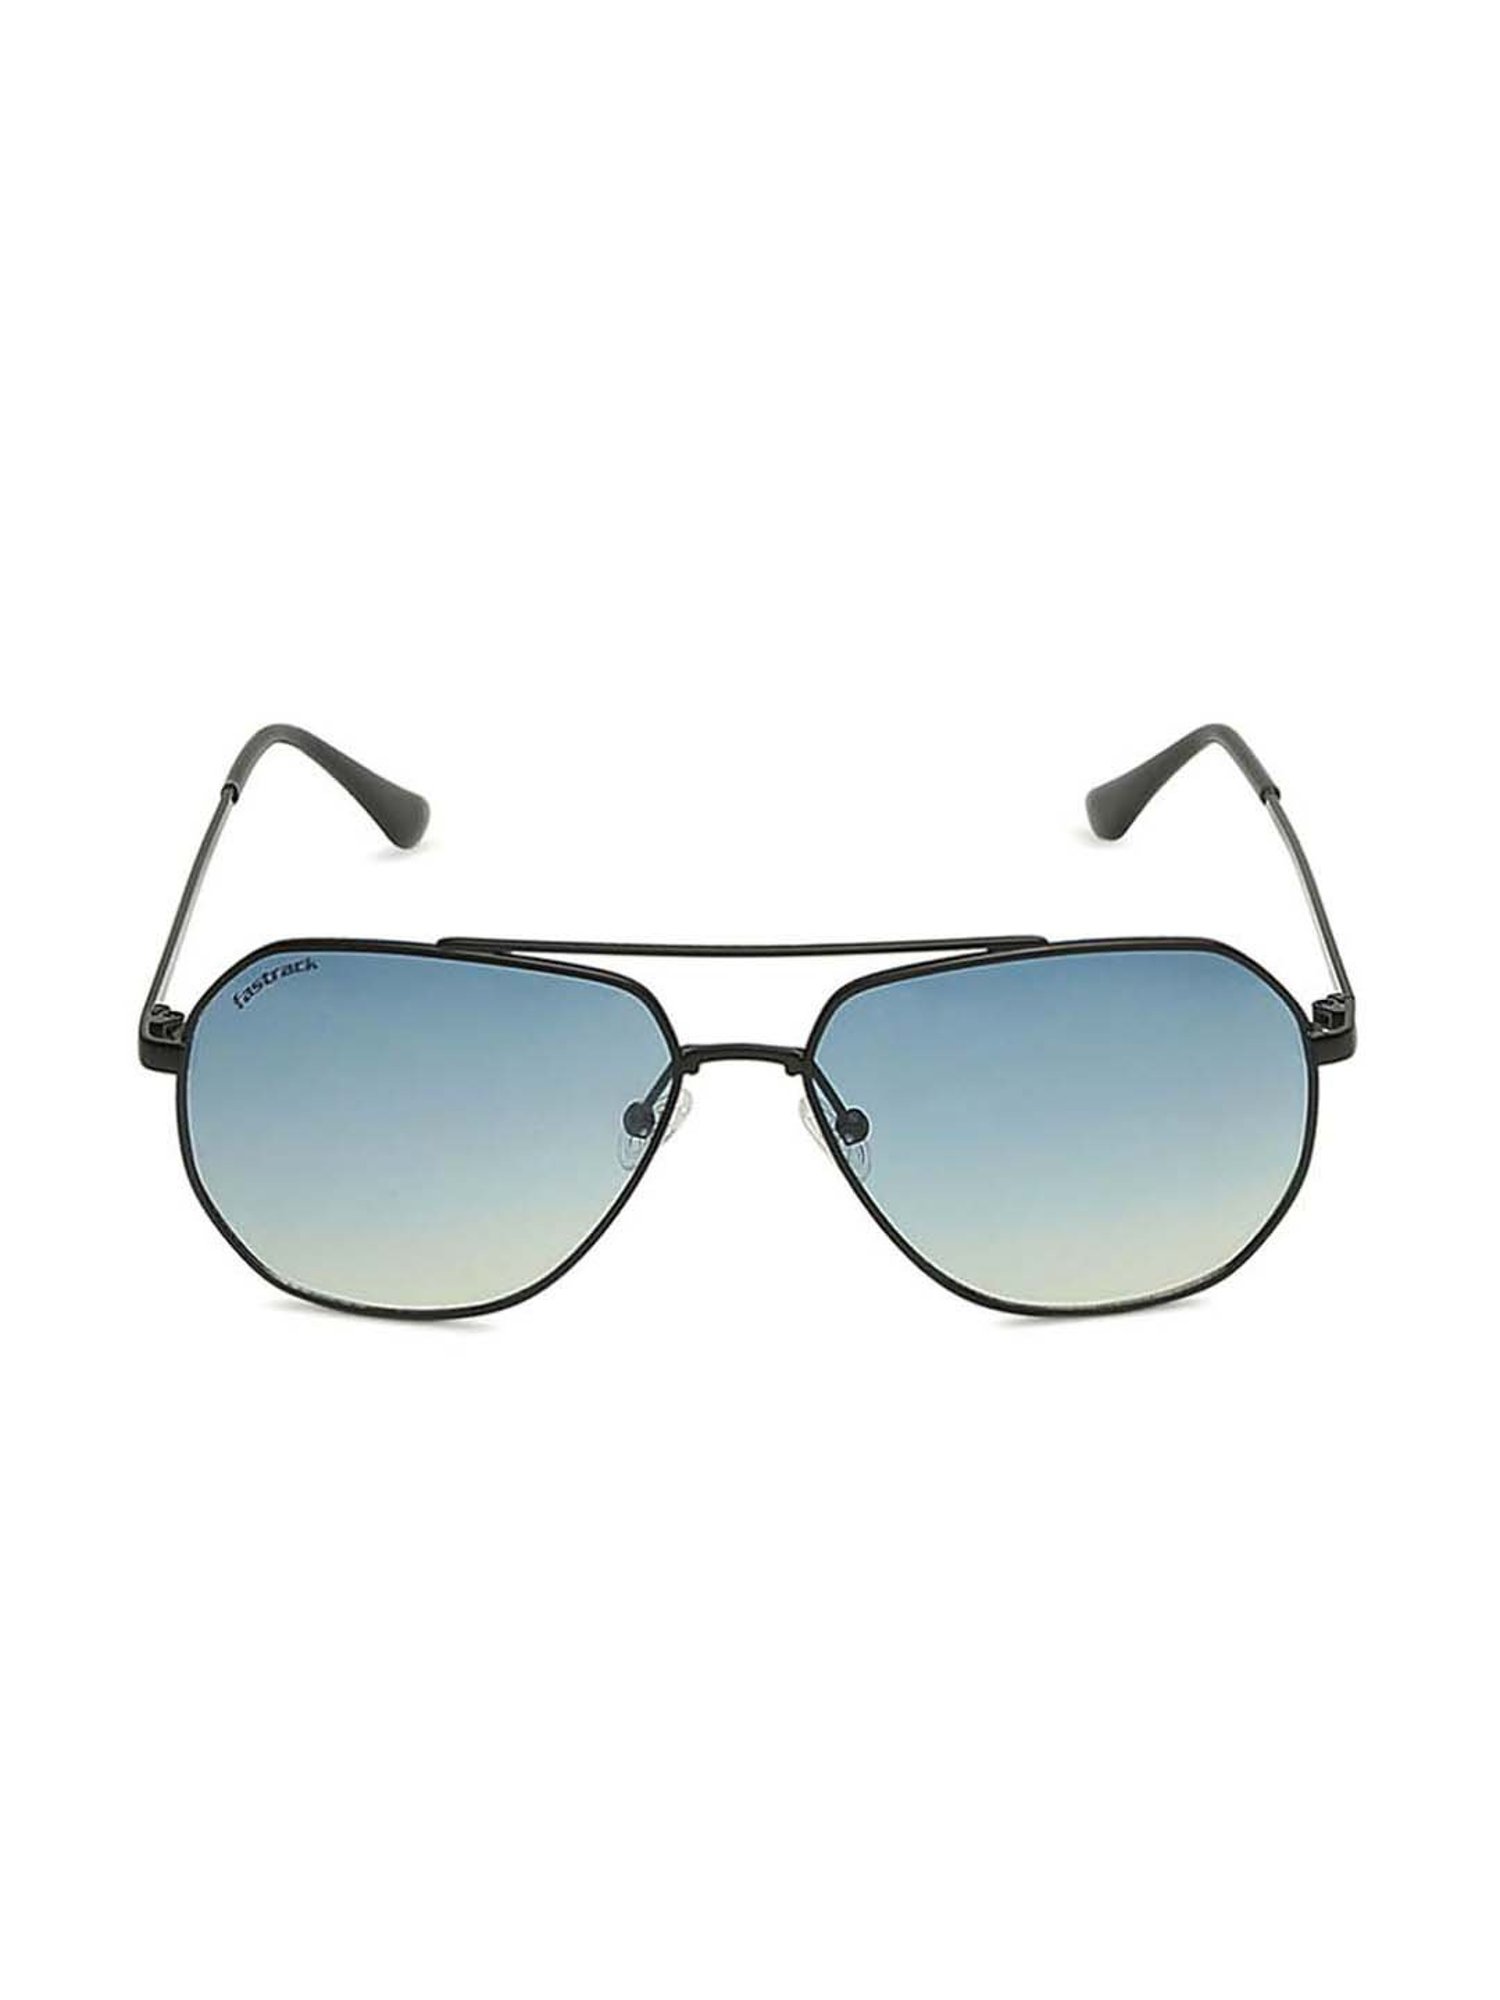 Buy Grey Sunglasses for Men by FASTRACK Online | Ajio.com